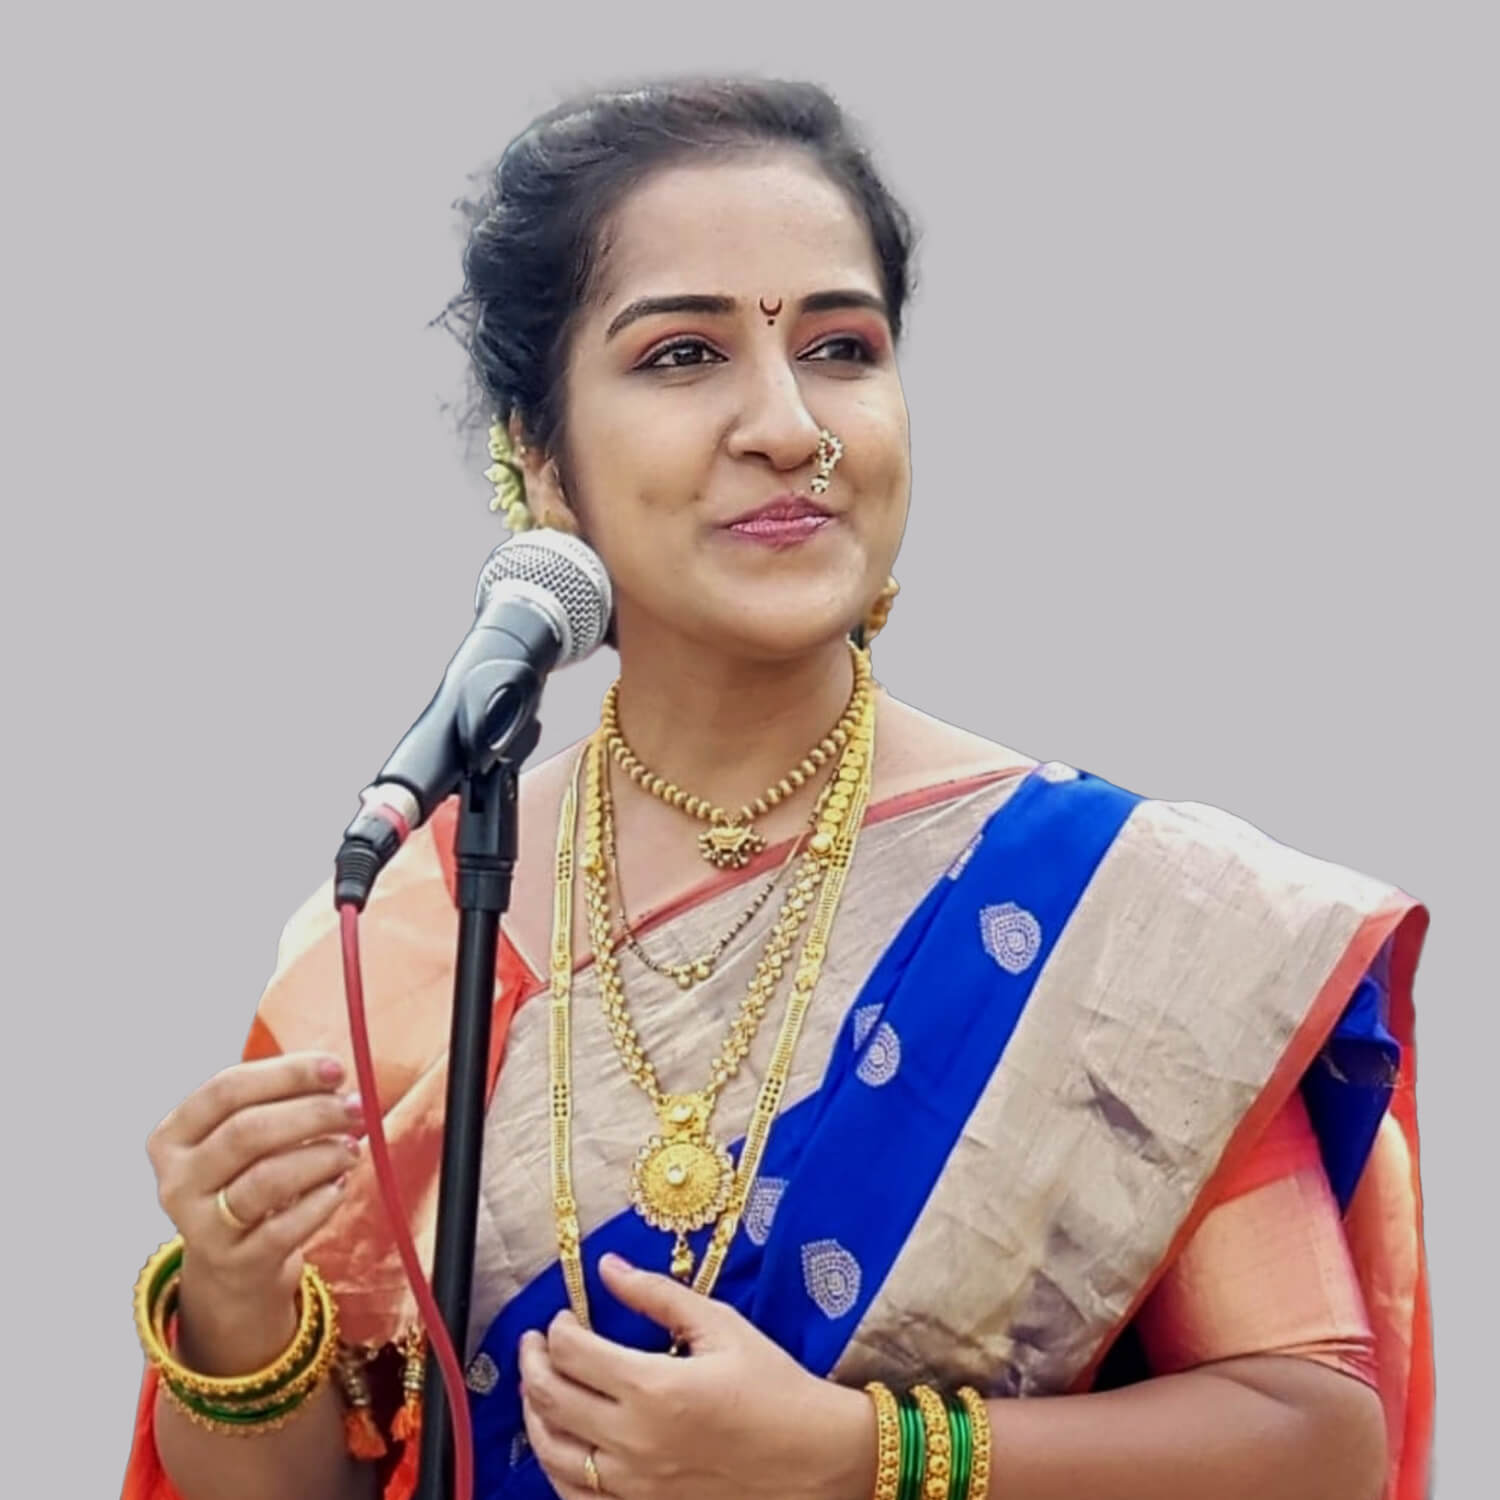 Gatha Jadhav Aigole